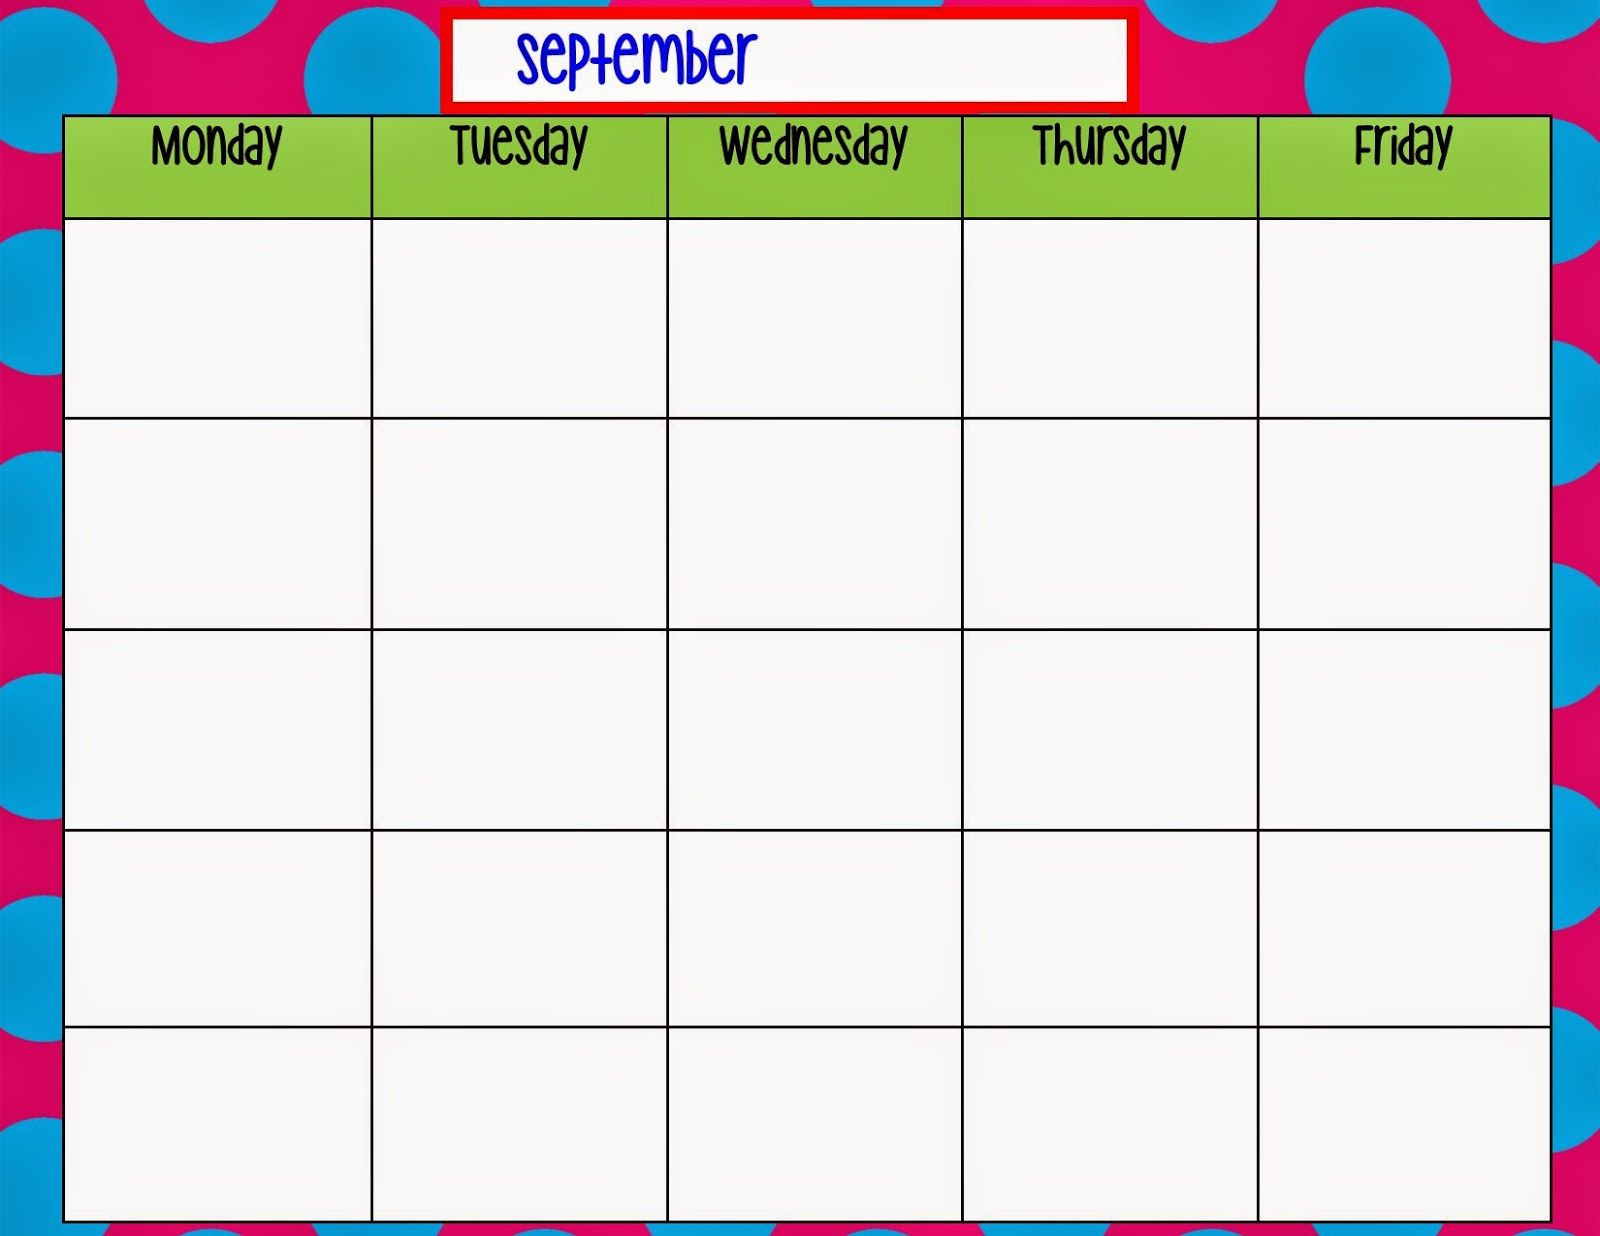 Monday Through Friday Calendar Template | Weekly Calendar intended for Monday-Friday Calendar Template